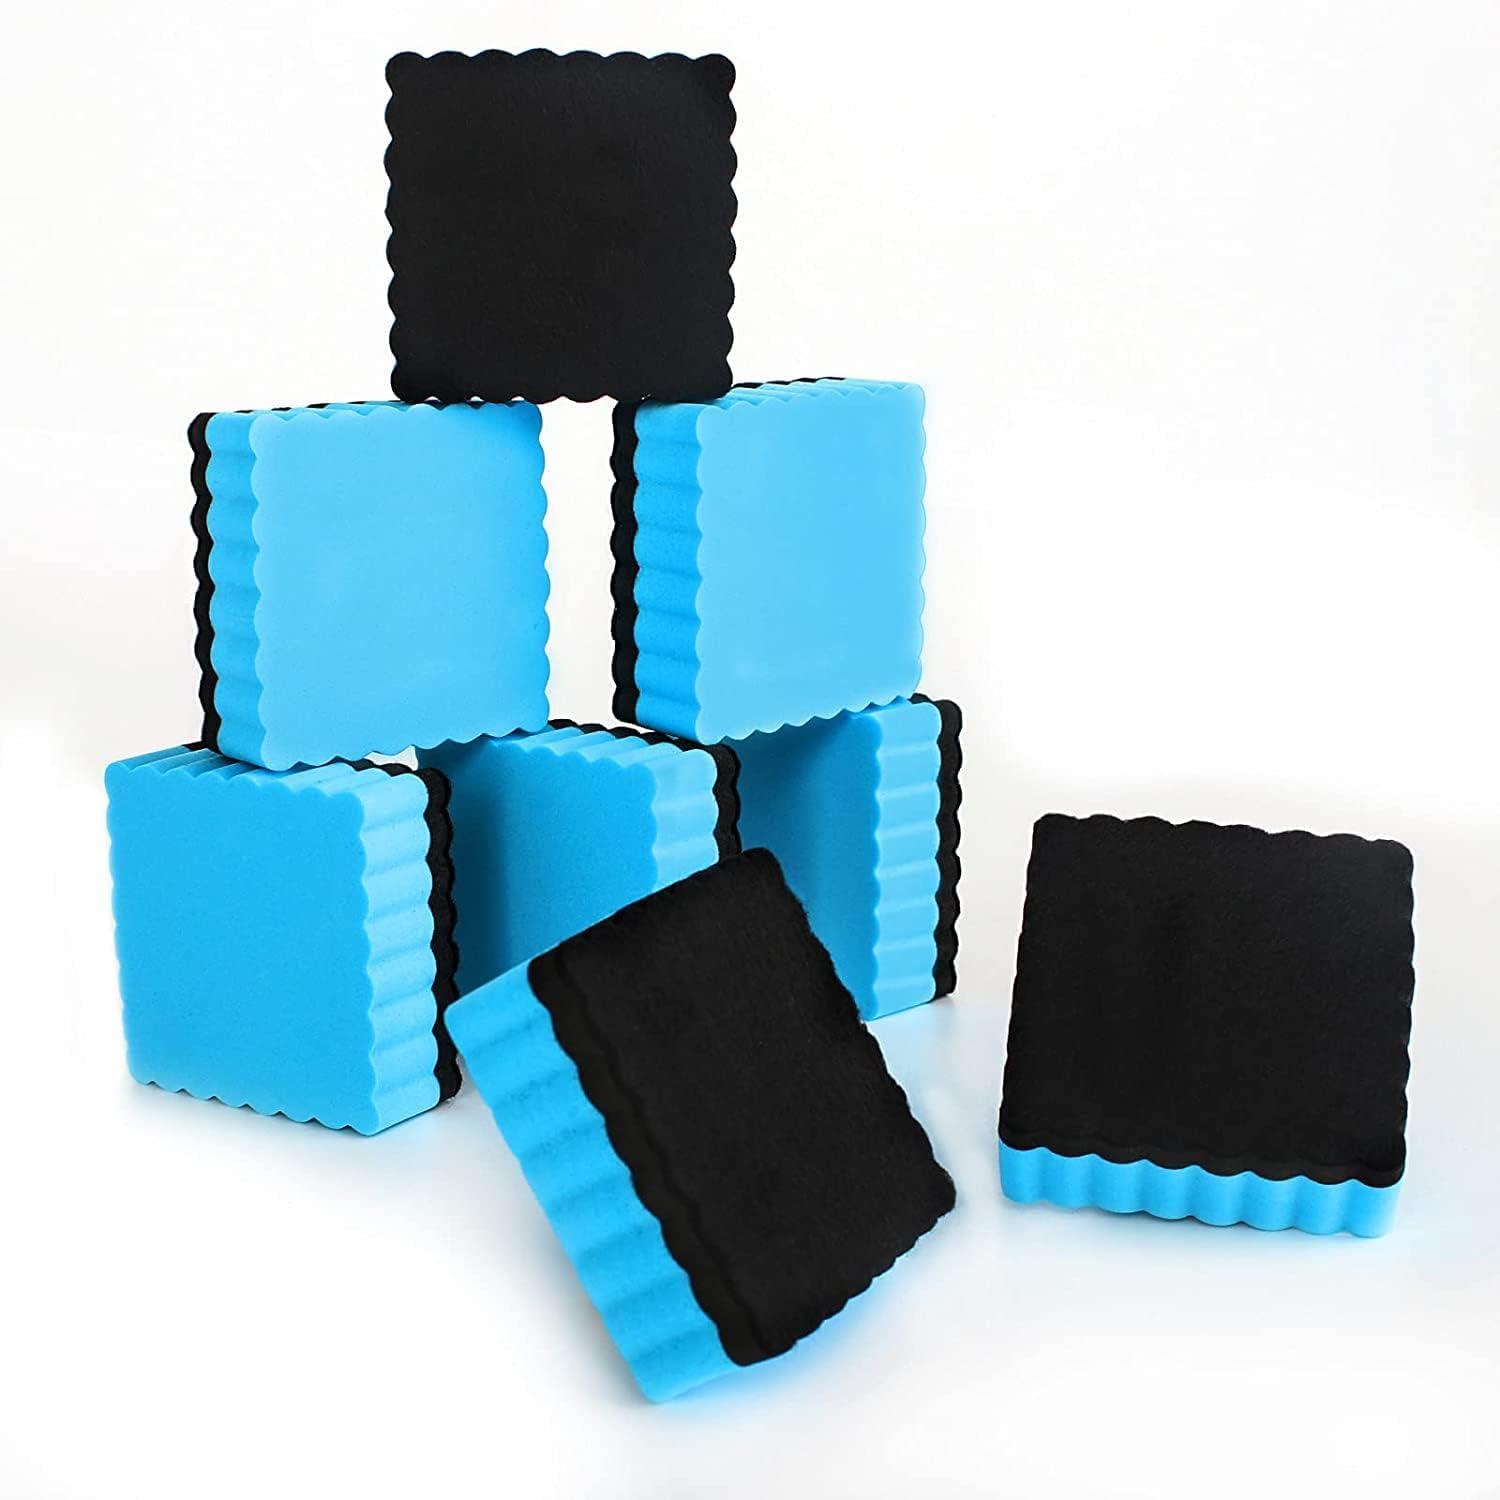 8 pack non-magnetic whiteboard dry eraser chalkboard eraser cleaner for classroom office 5 x 5cm blue 